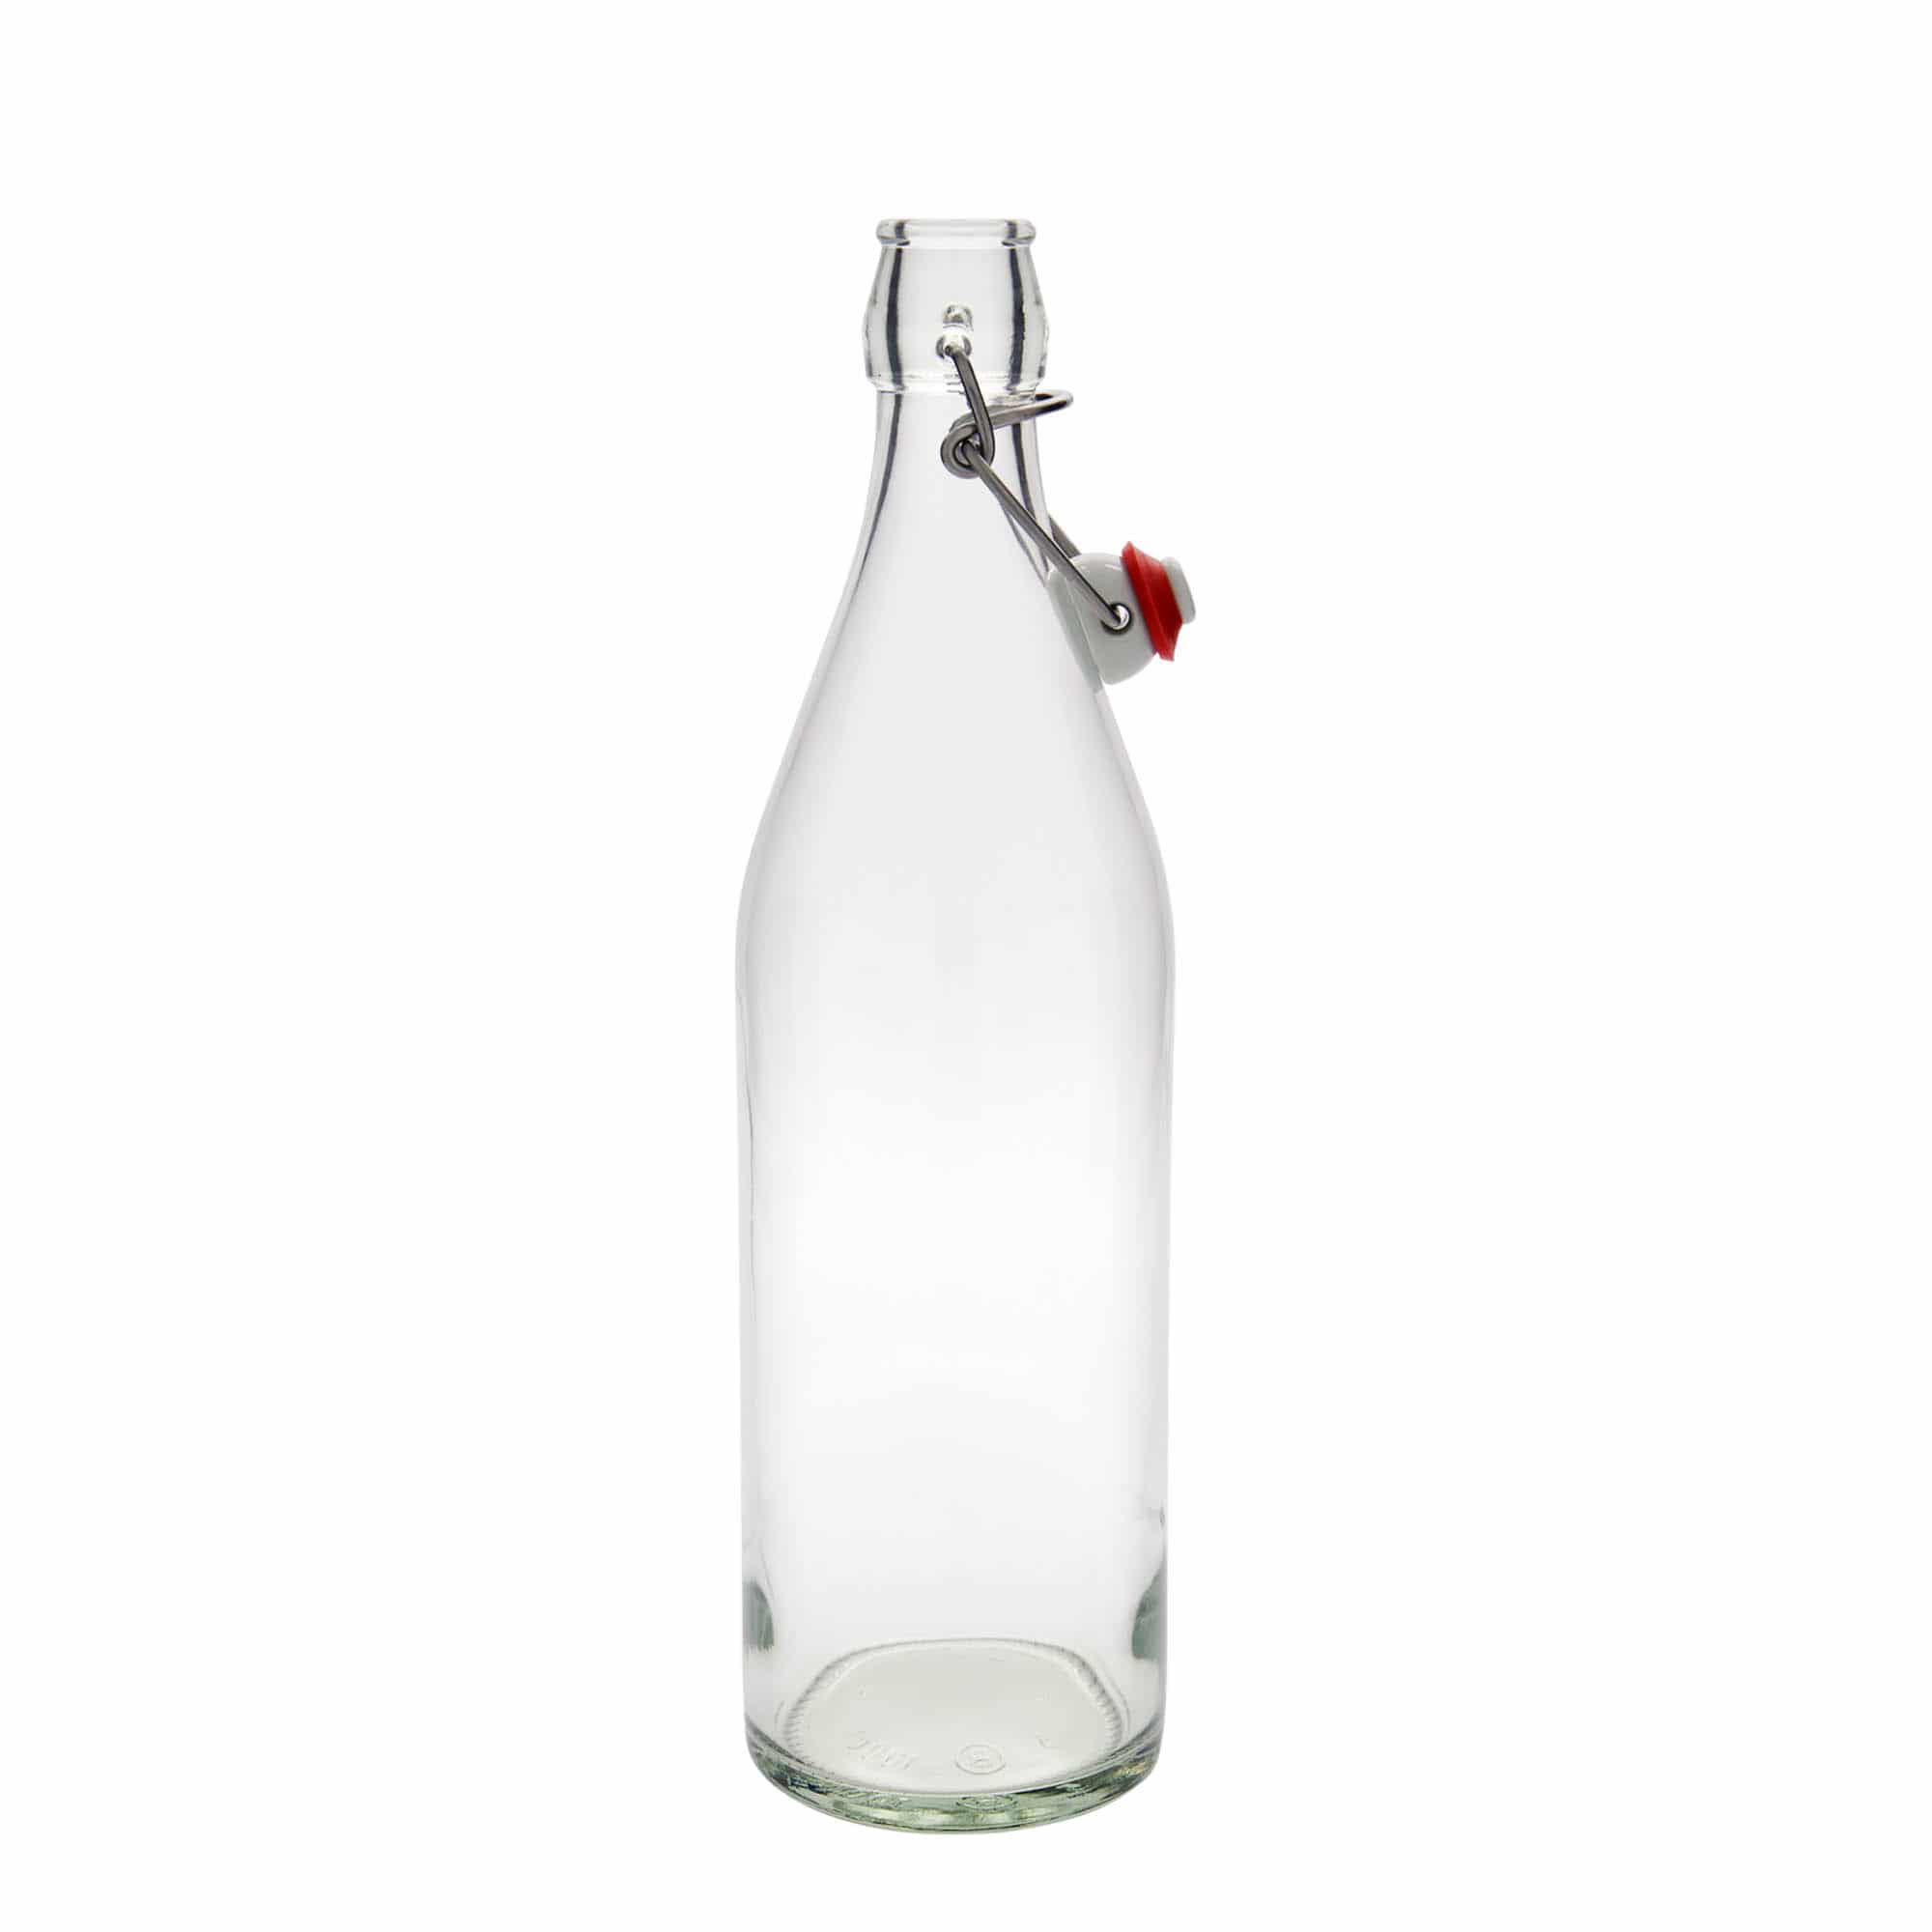 1,000 ml glass bottle 'Giara', closure: swing top